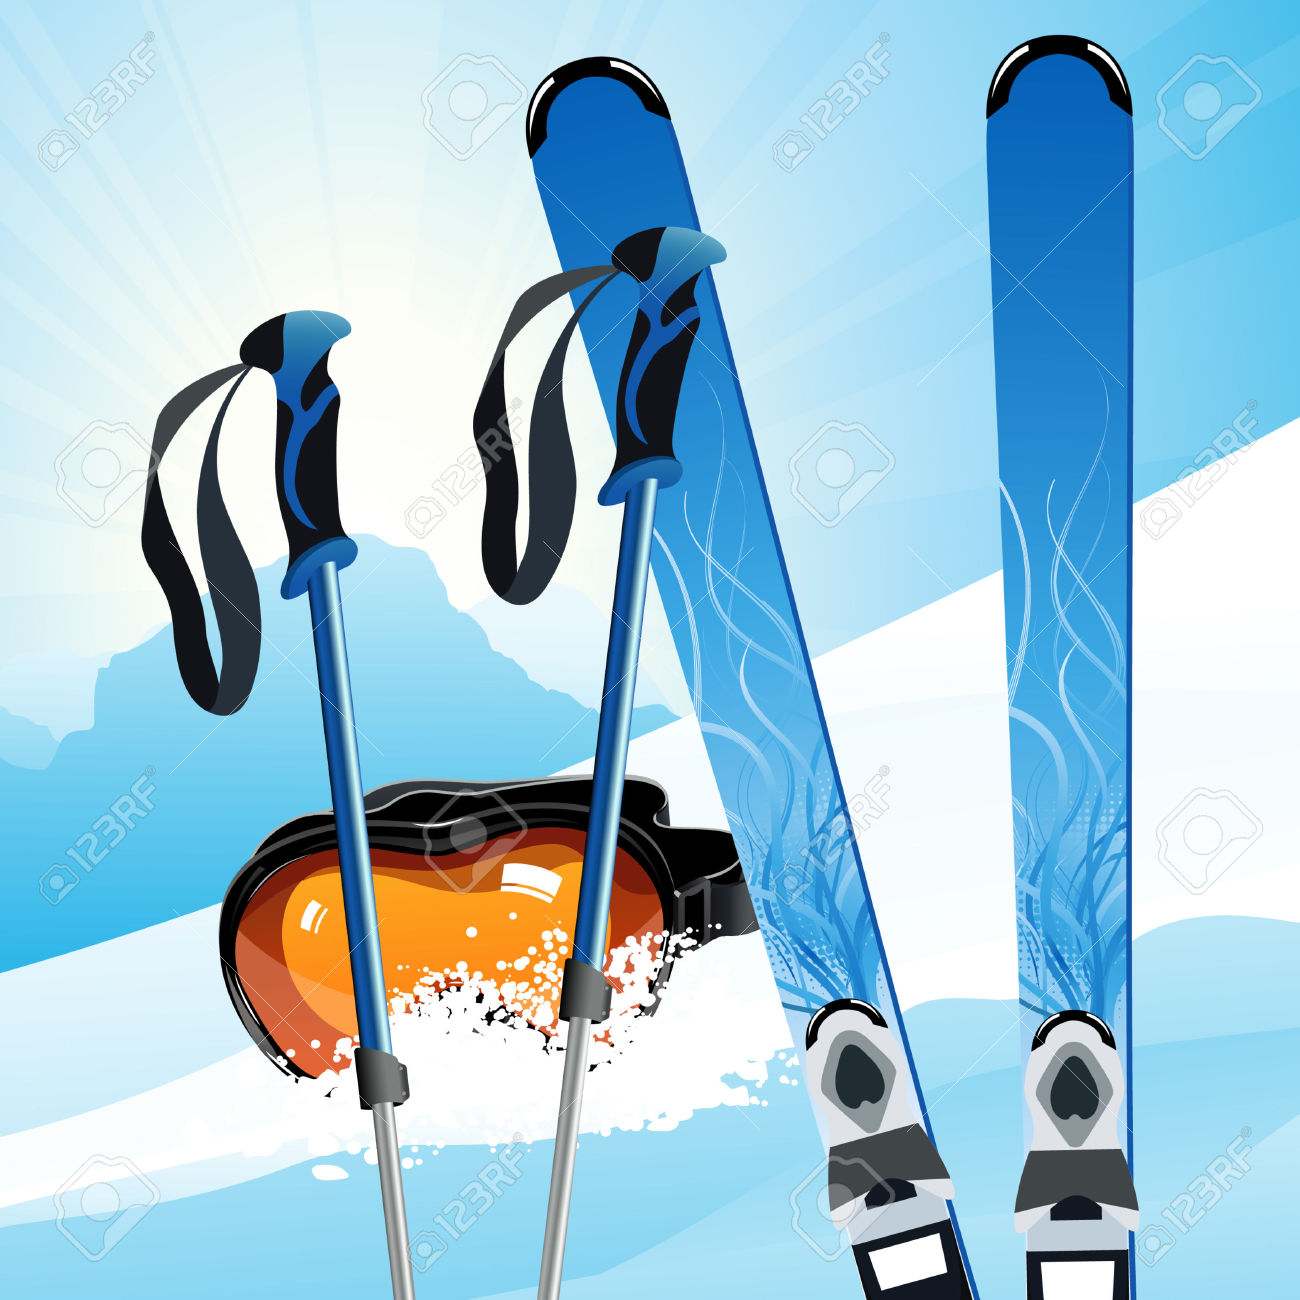 skiing clipart skiing equipment